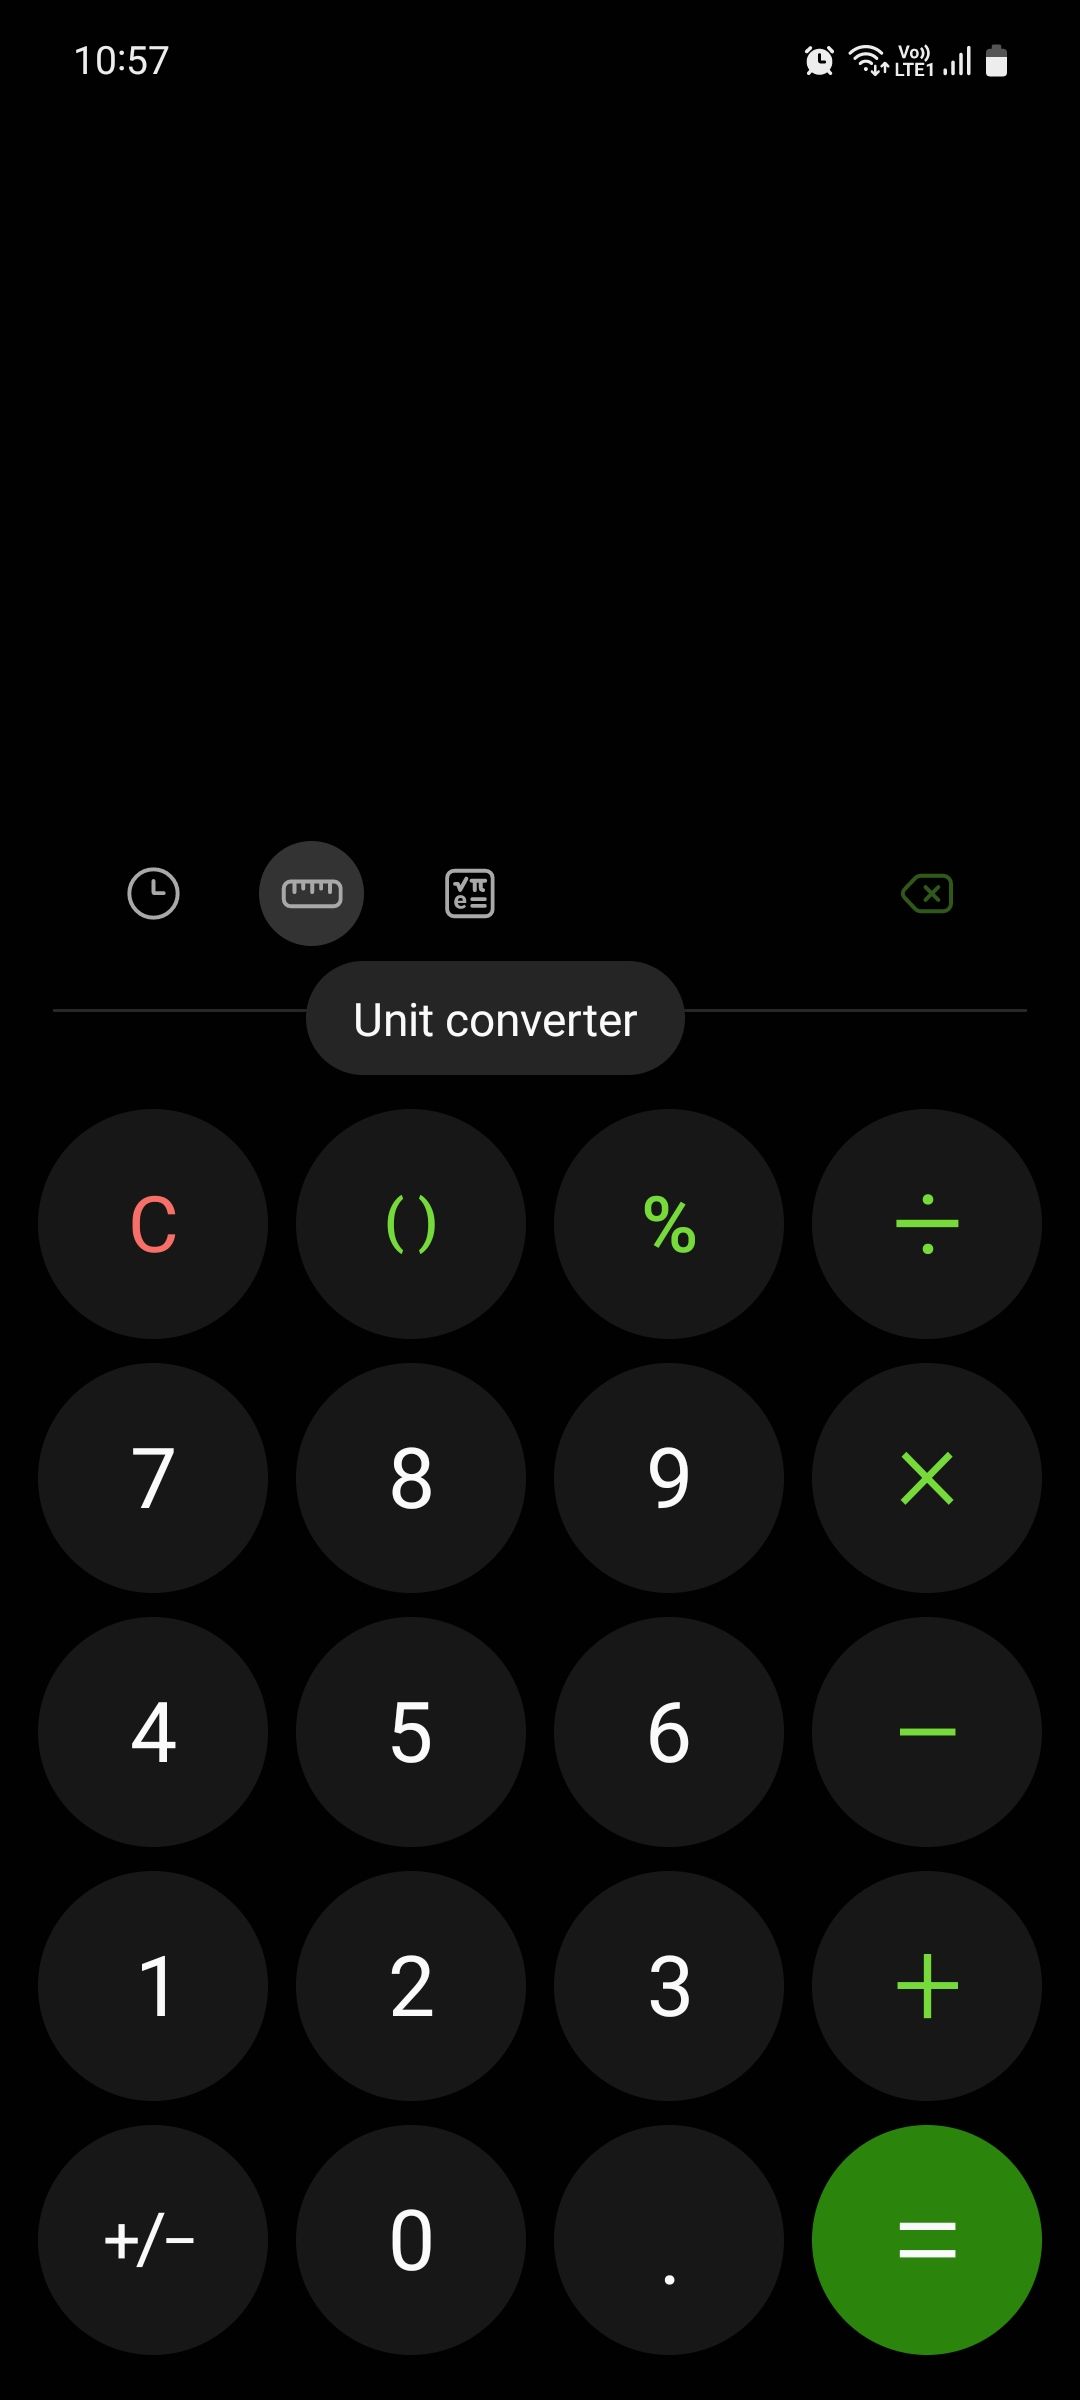 Samsung Calculator Unit converter button